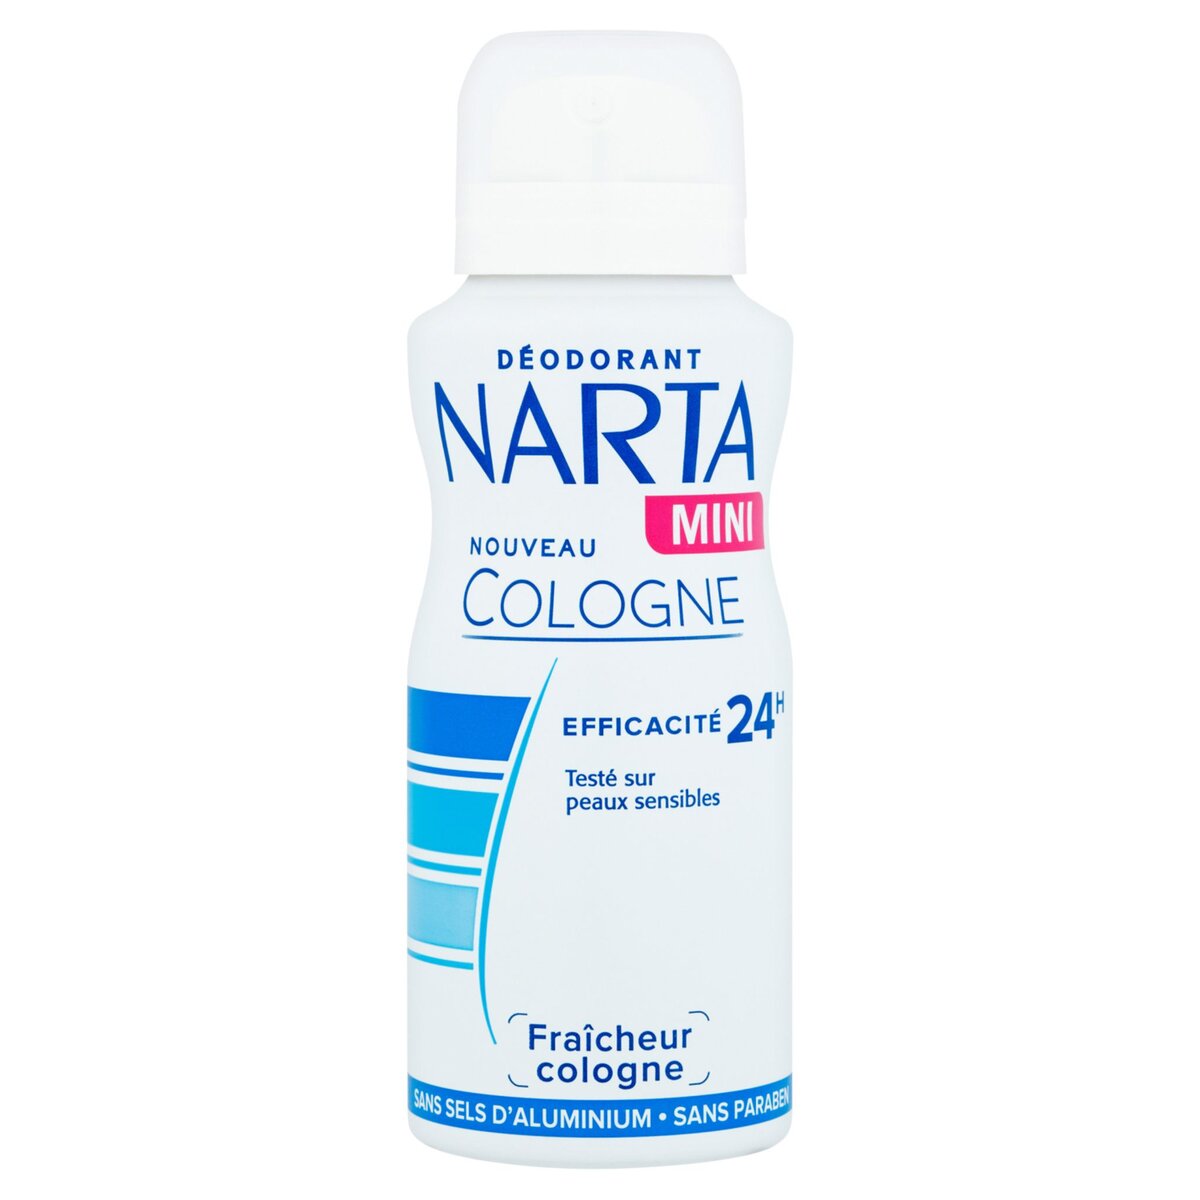 NARTA Narta déodorant mini fraîcheur cologne atomiseur 100ml